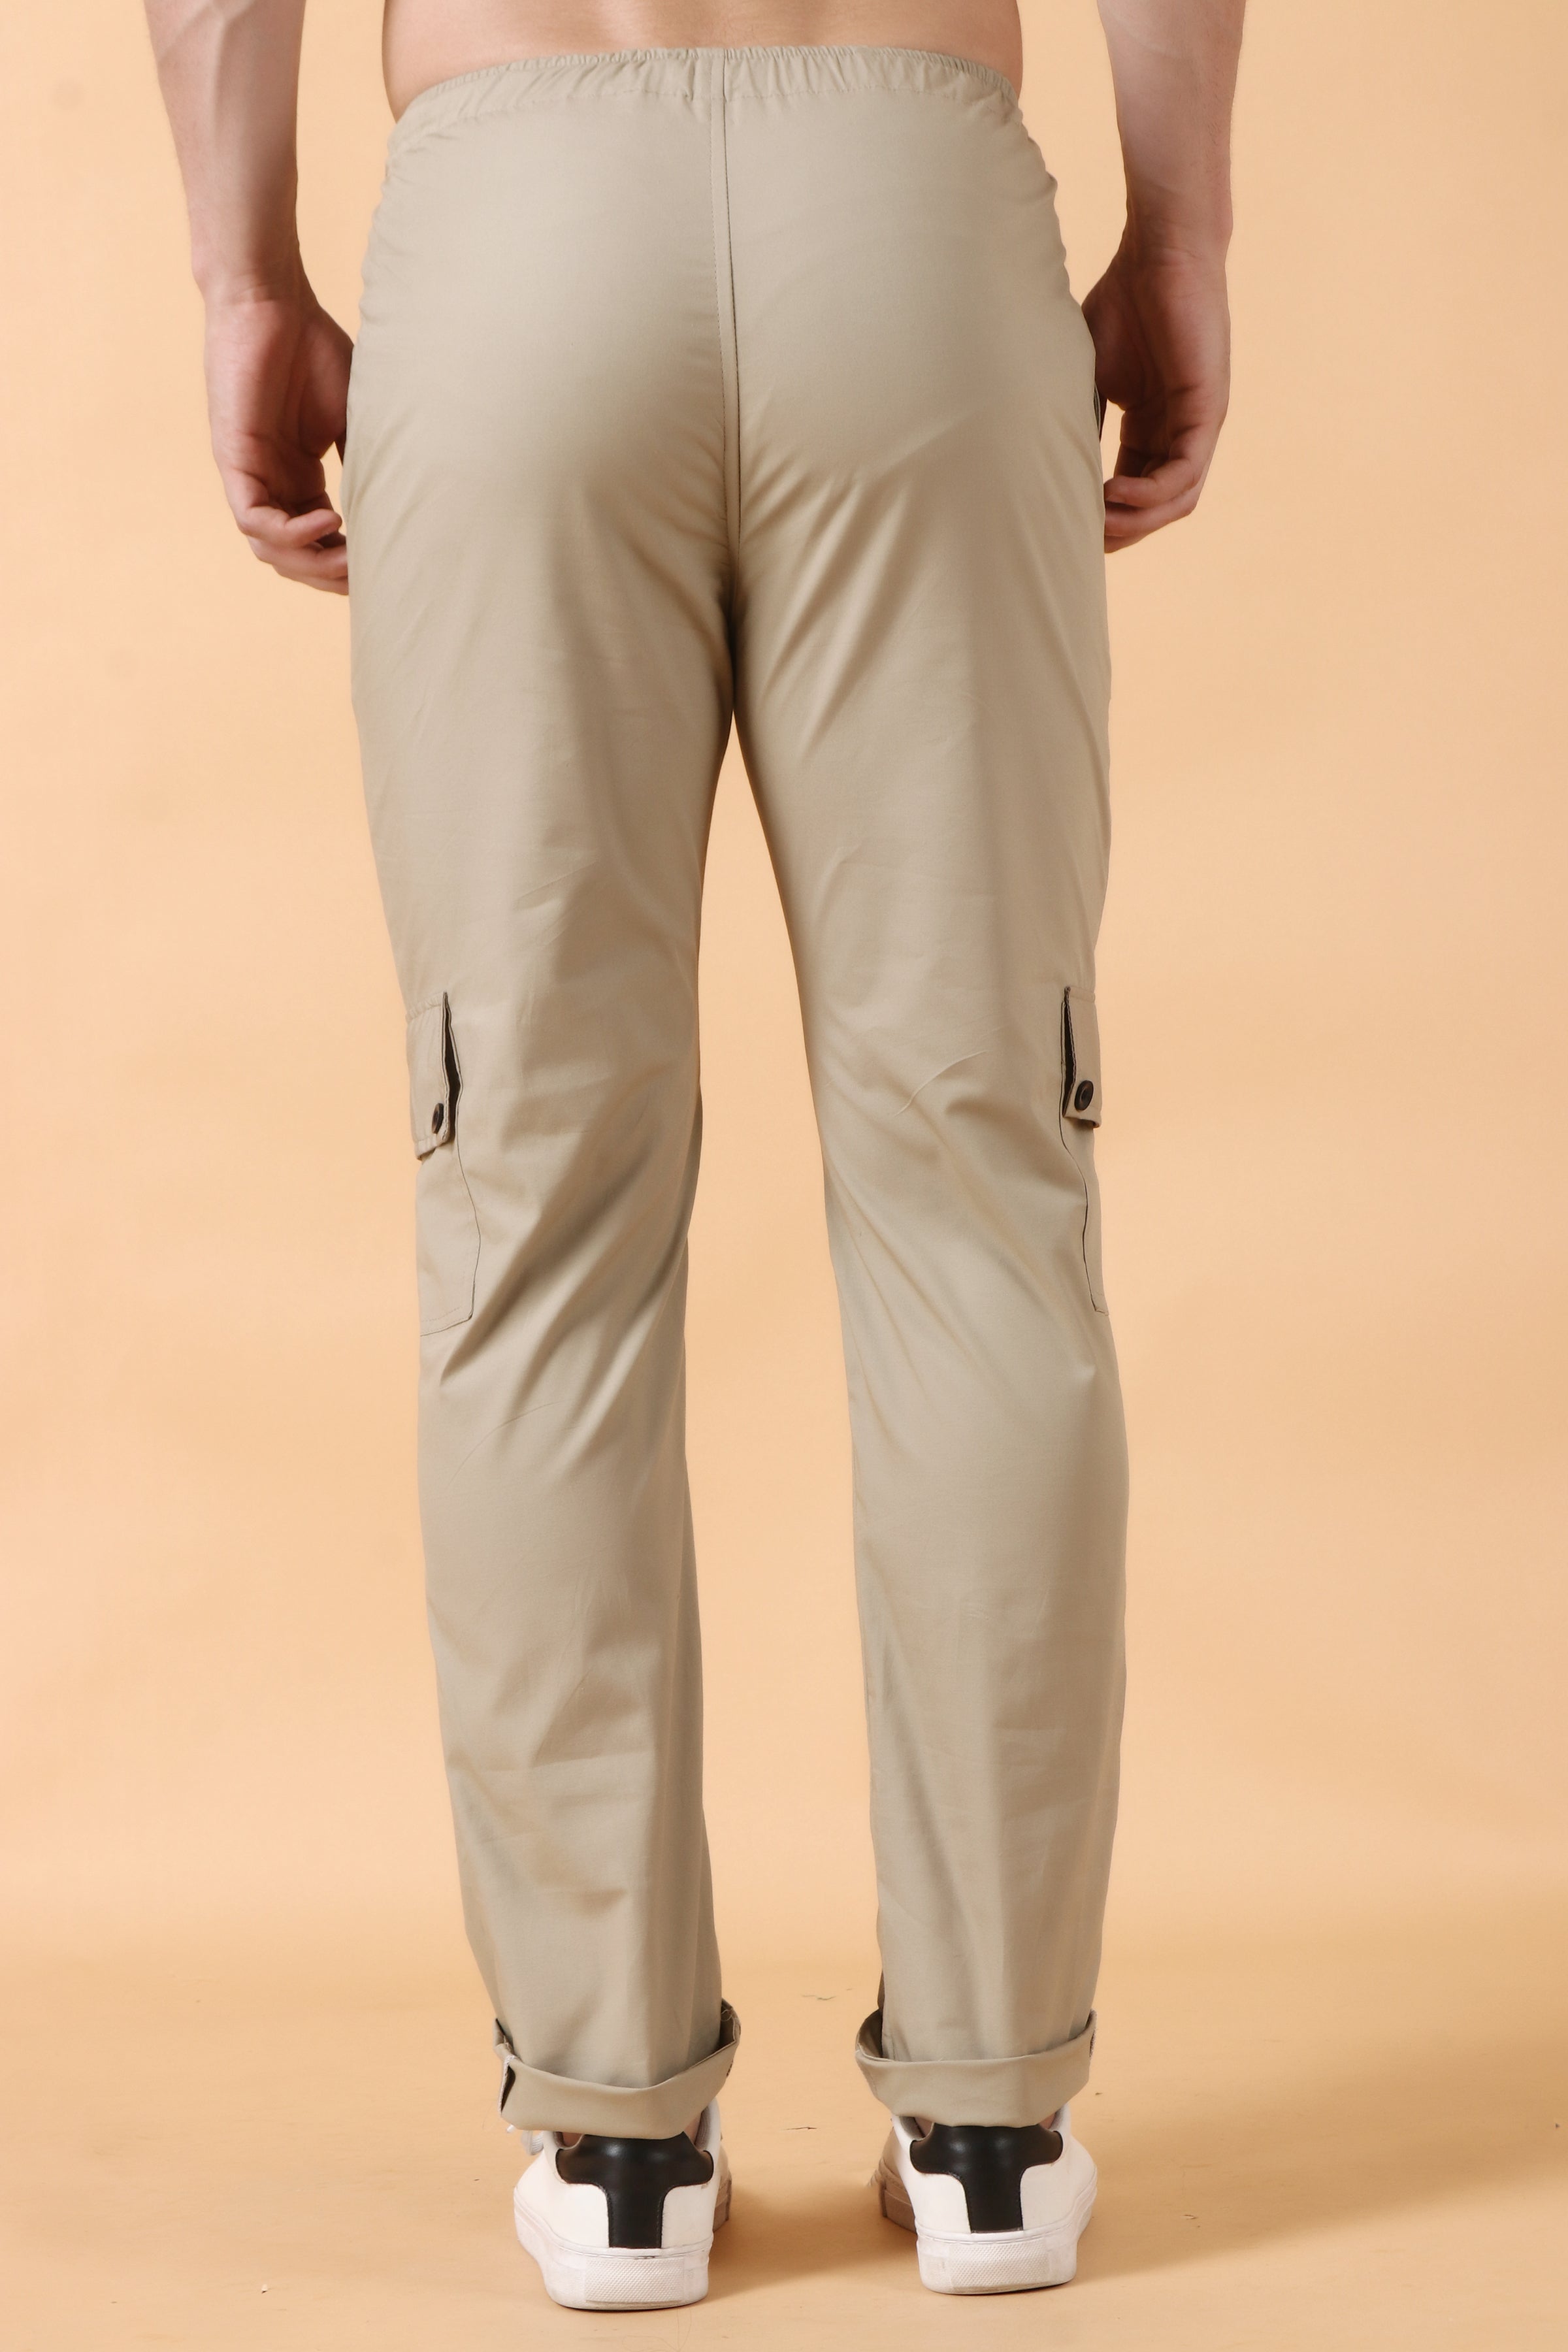 Plus Size 3044 Mens Cargo Pants Casual Mens Pant Multi Pocket Cargos  Trousers Men Long Pant P45  Casual Pants  AliExpress